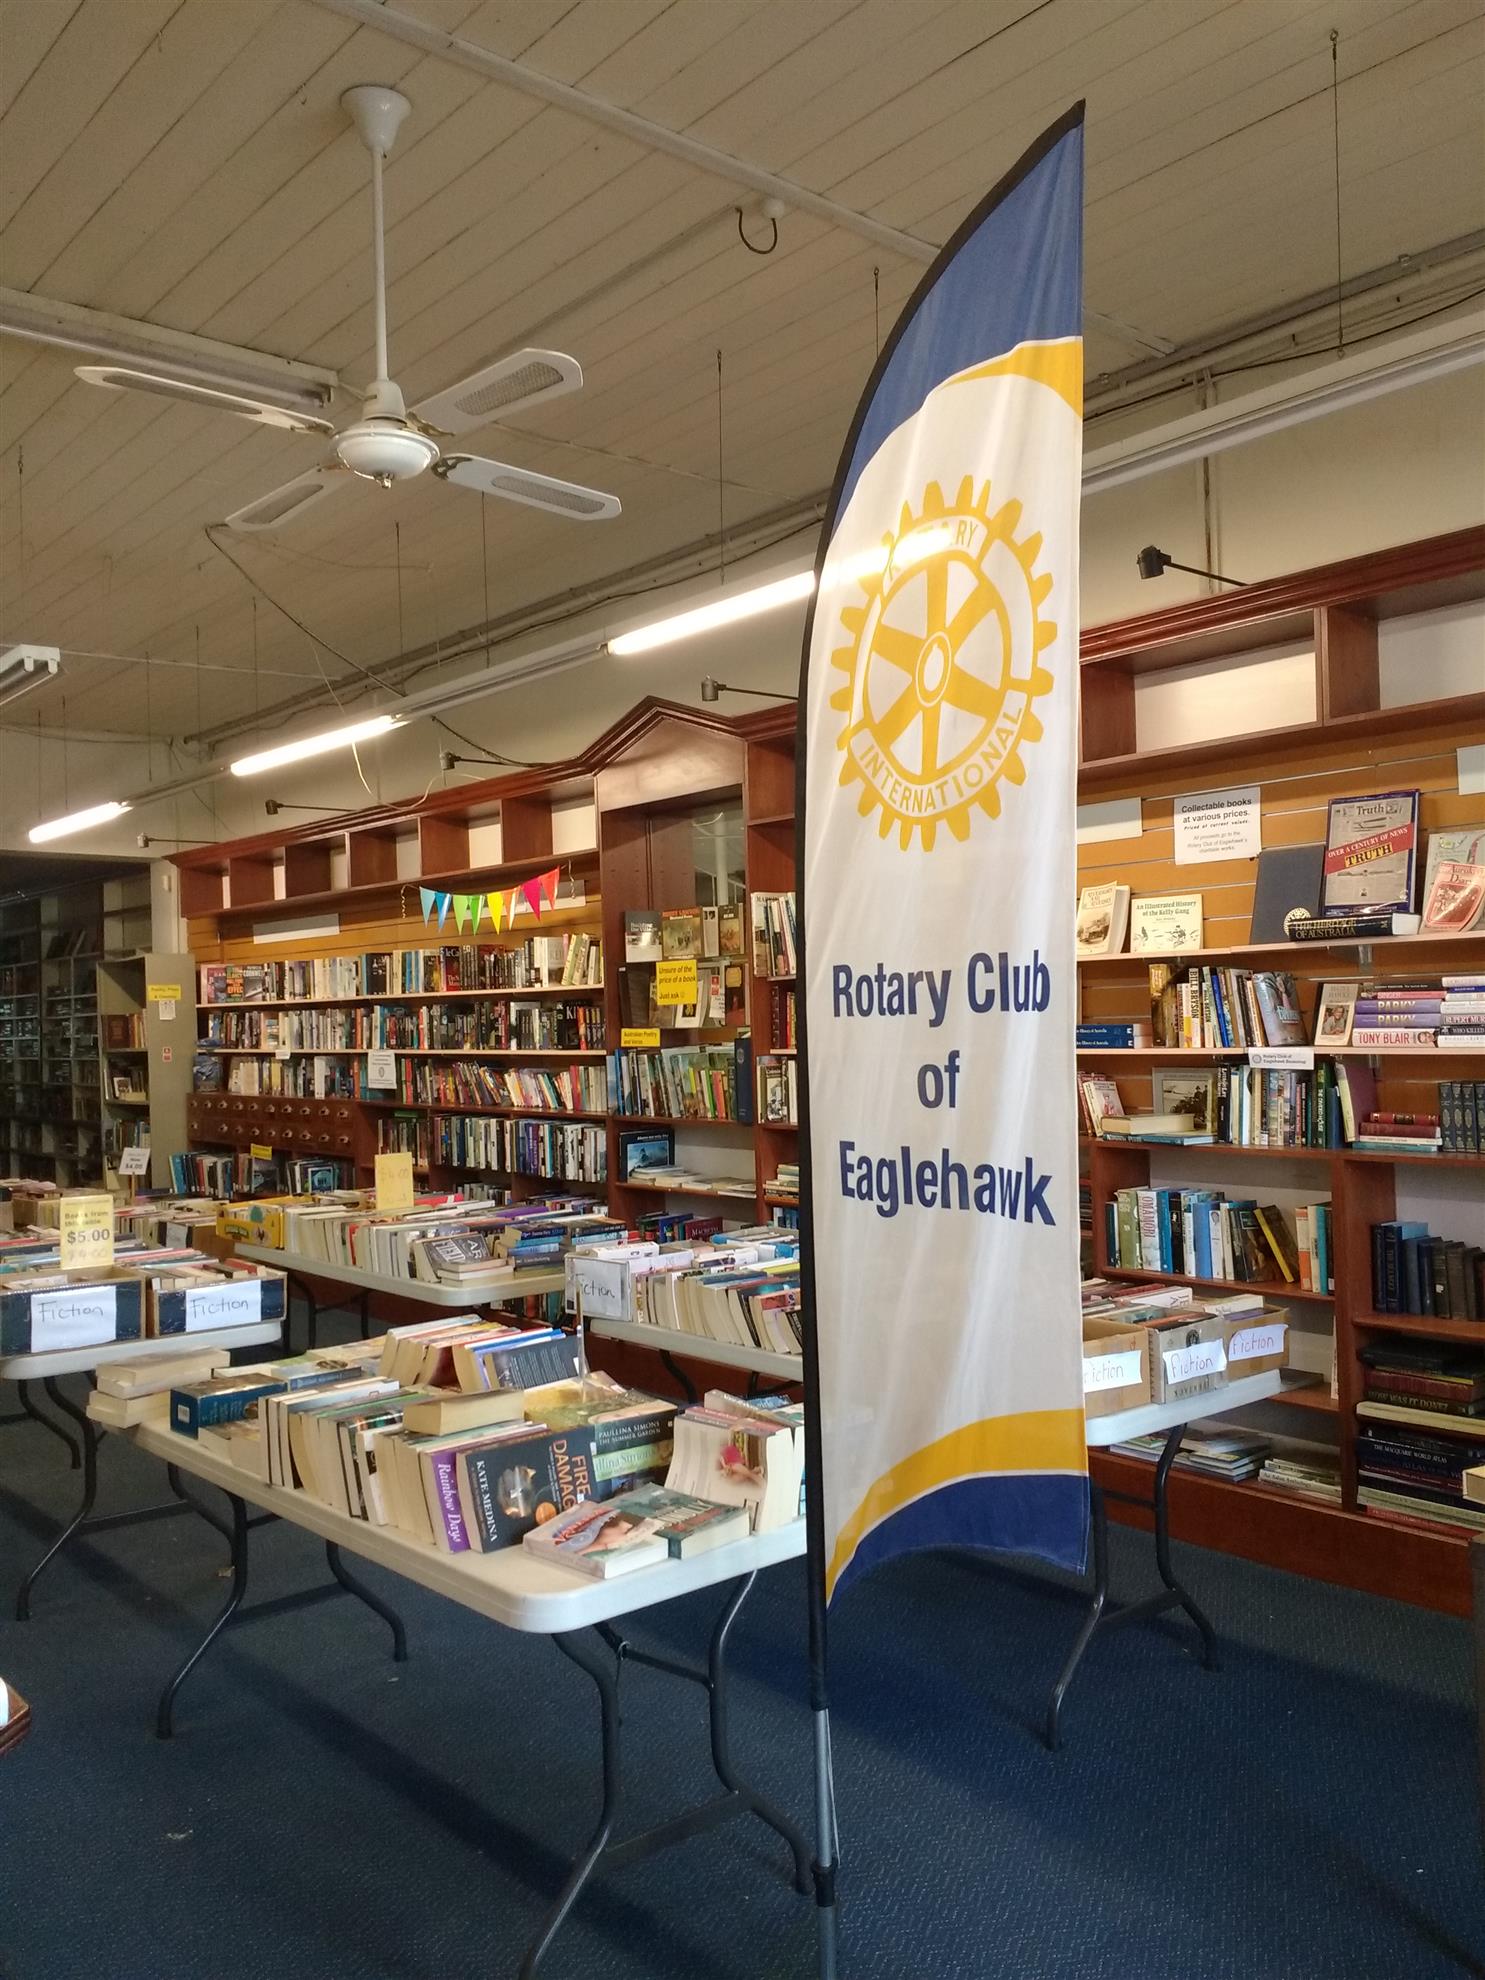 Rotary Book Shop